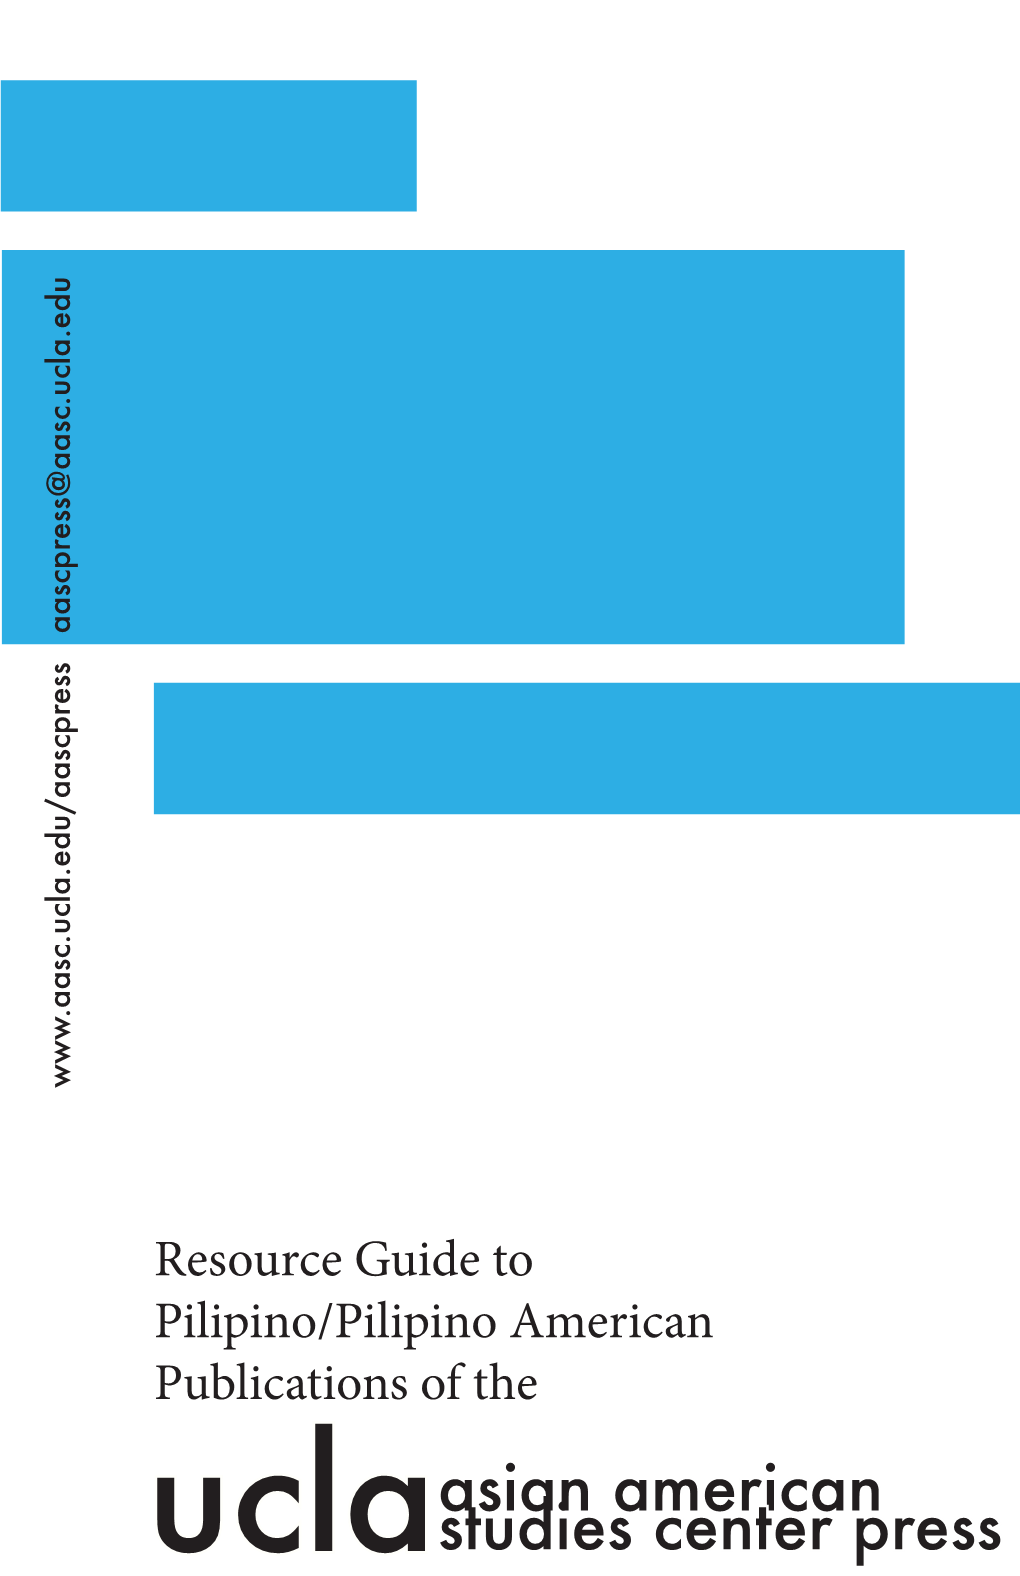 Pilipino/Pilipino American Resource Guide to Center Press Publications